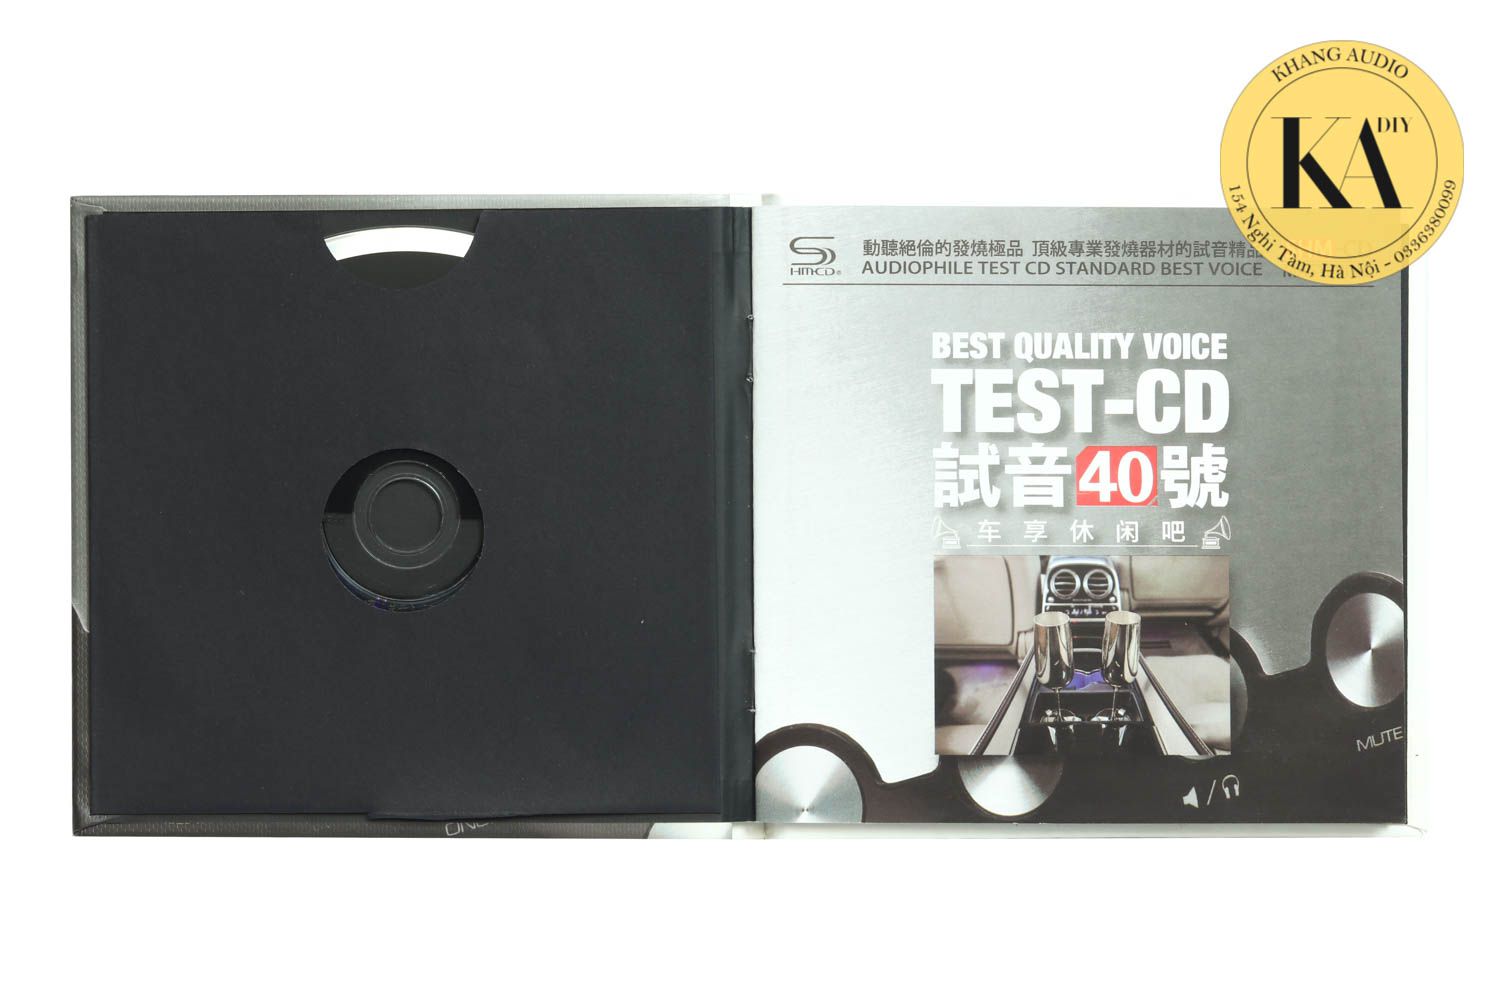 Test CD No.40 Khang Audio 0336380099